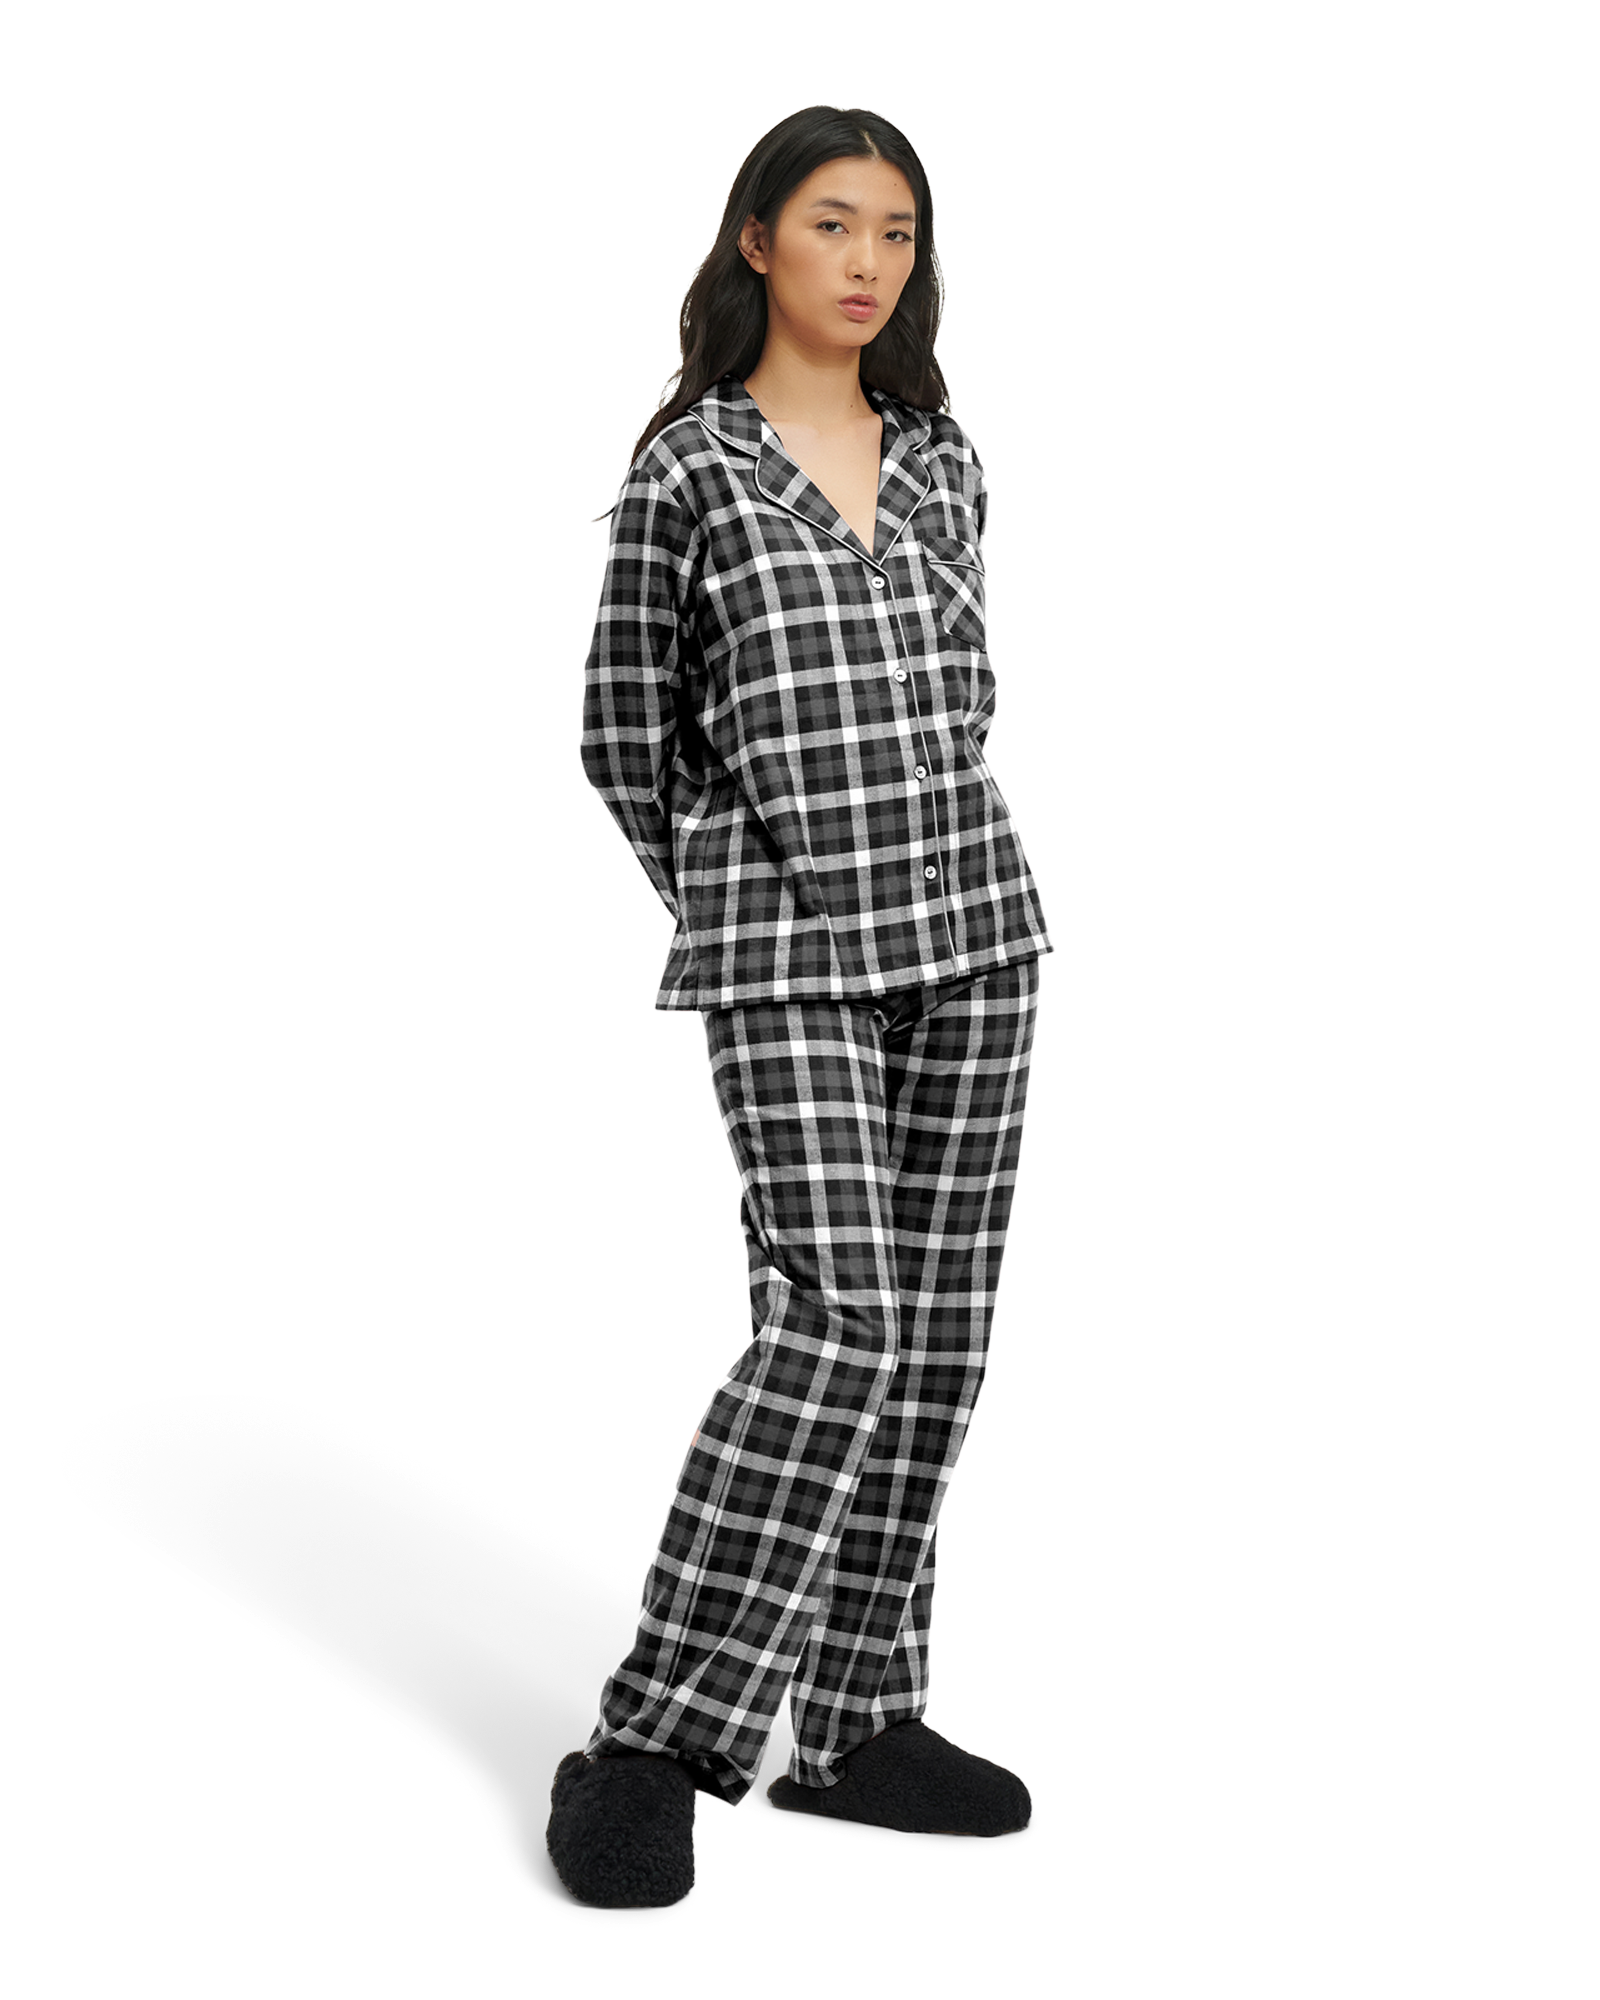 UGG Ophilia Pyjama Set for Women in Black/White Check, Size Medium, Cotton